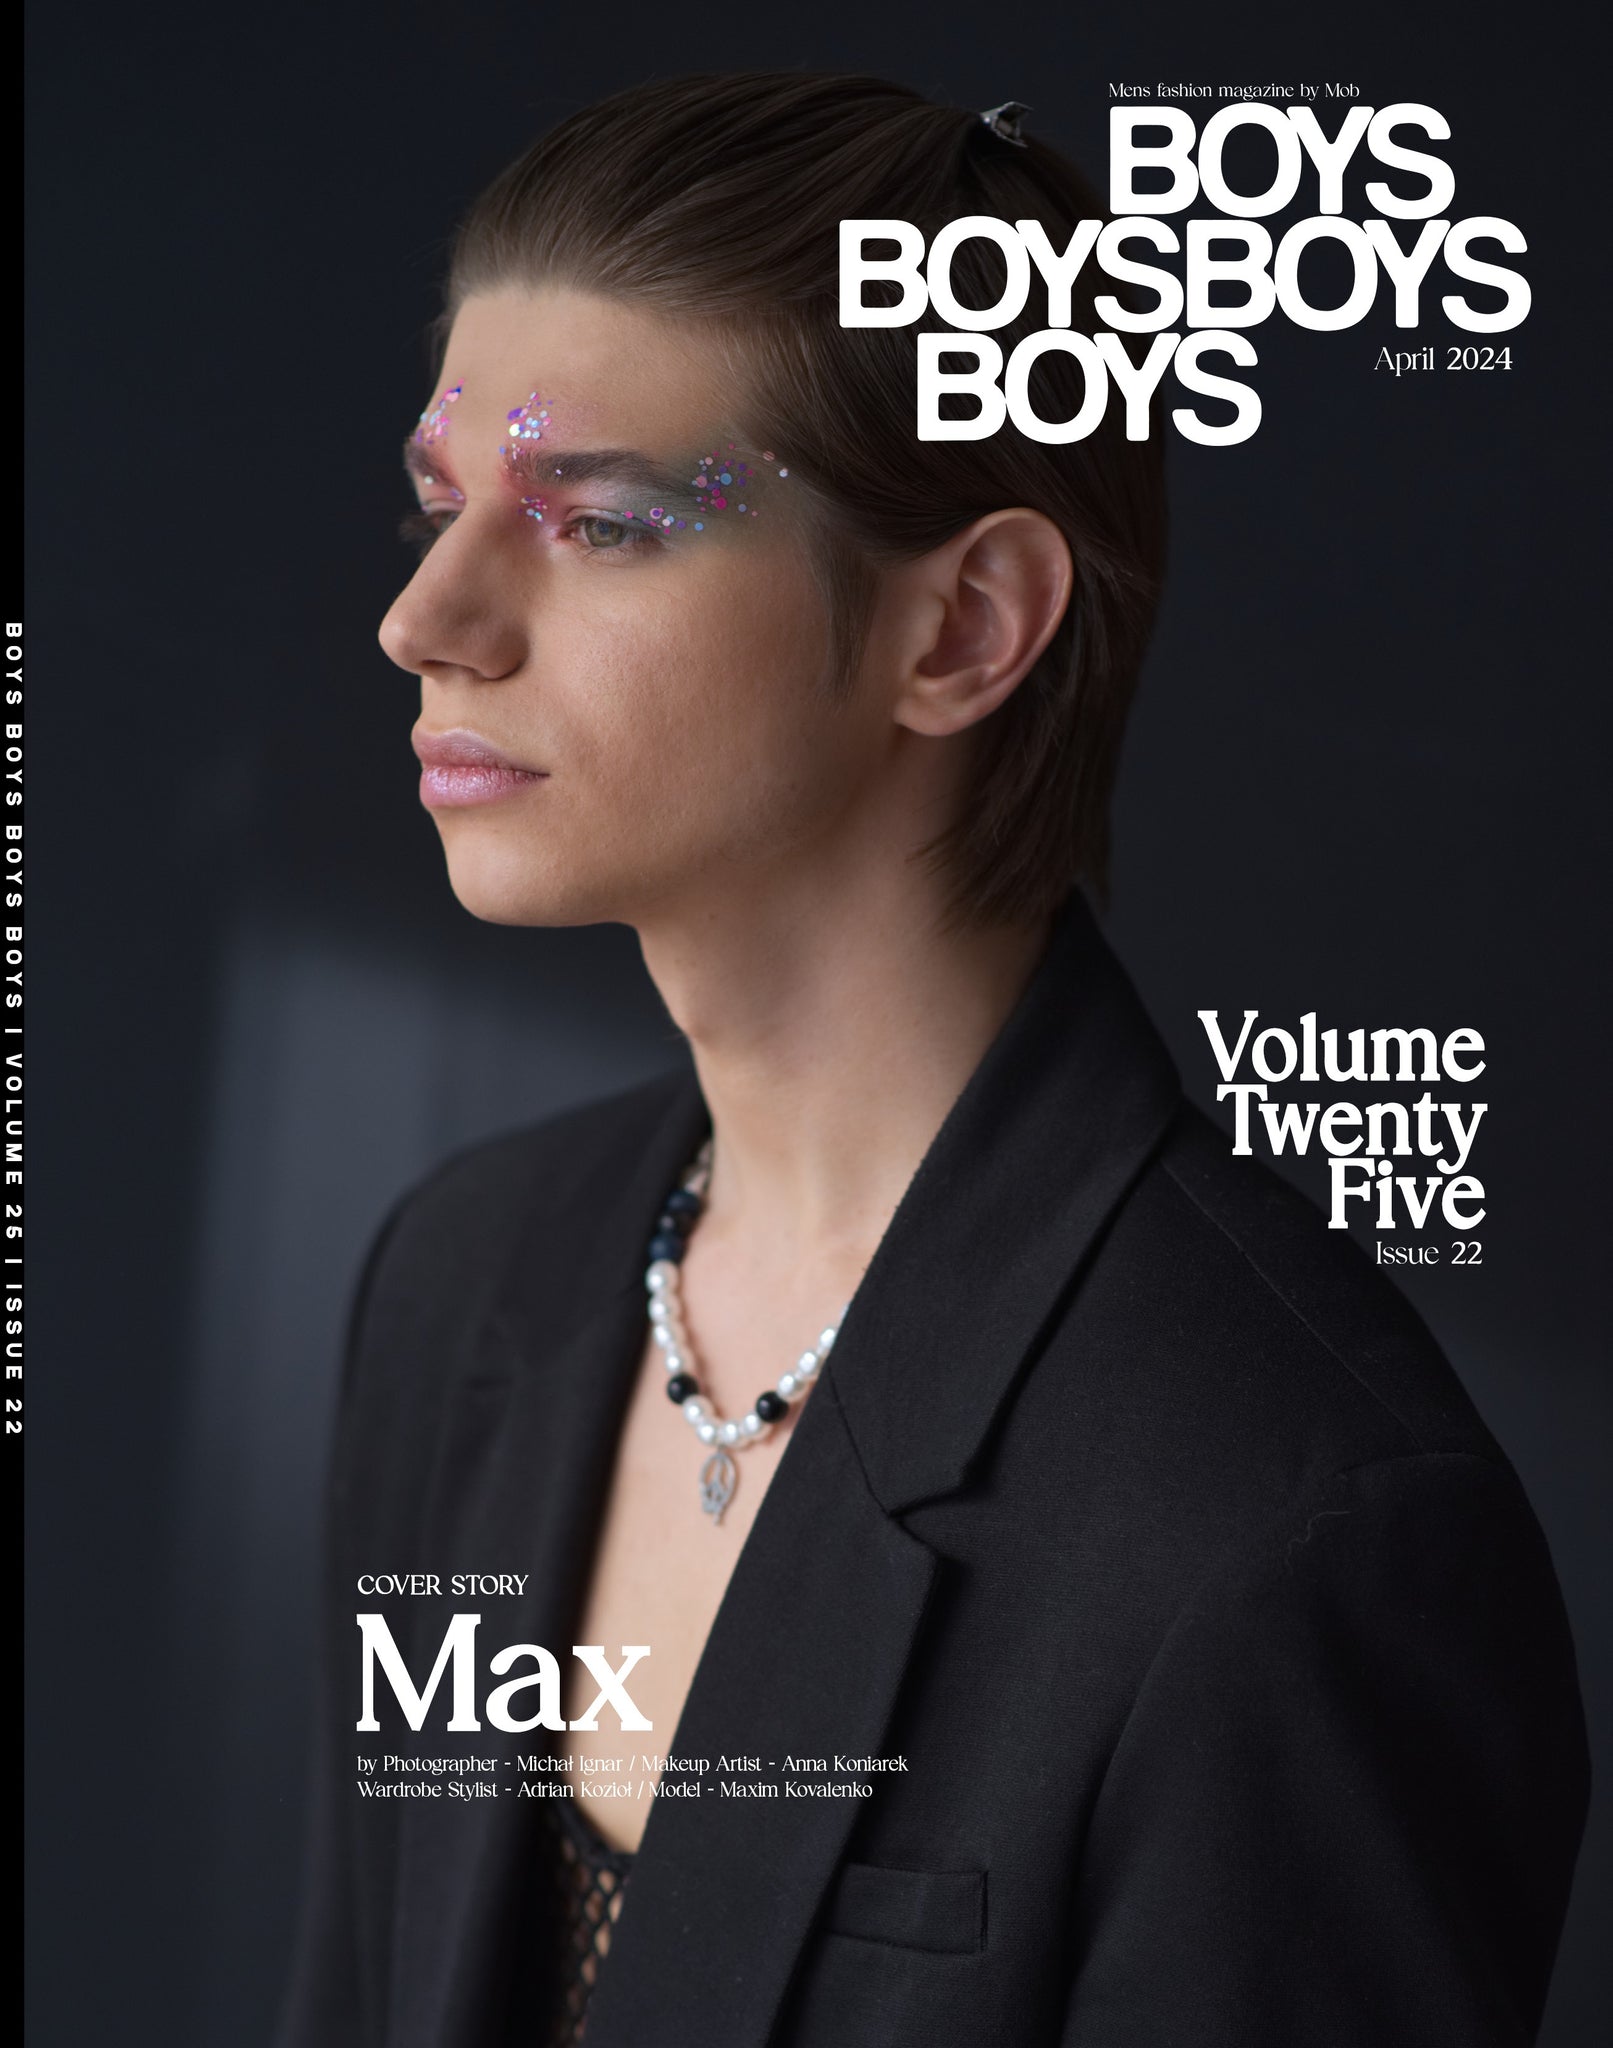 BOYS BOYS BOYS BOYS | VOLUME TWENTY FIVE | ISSUE #22